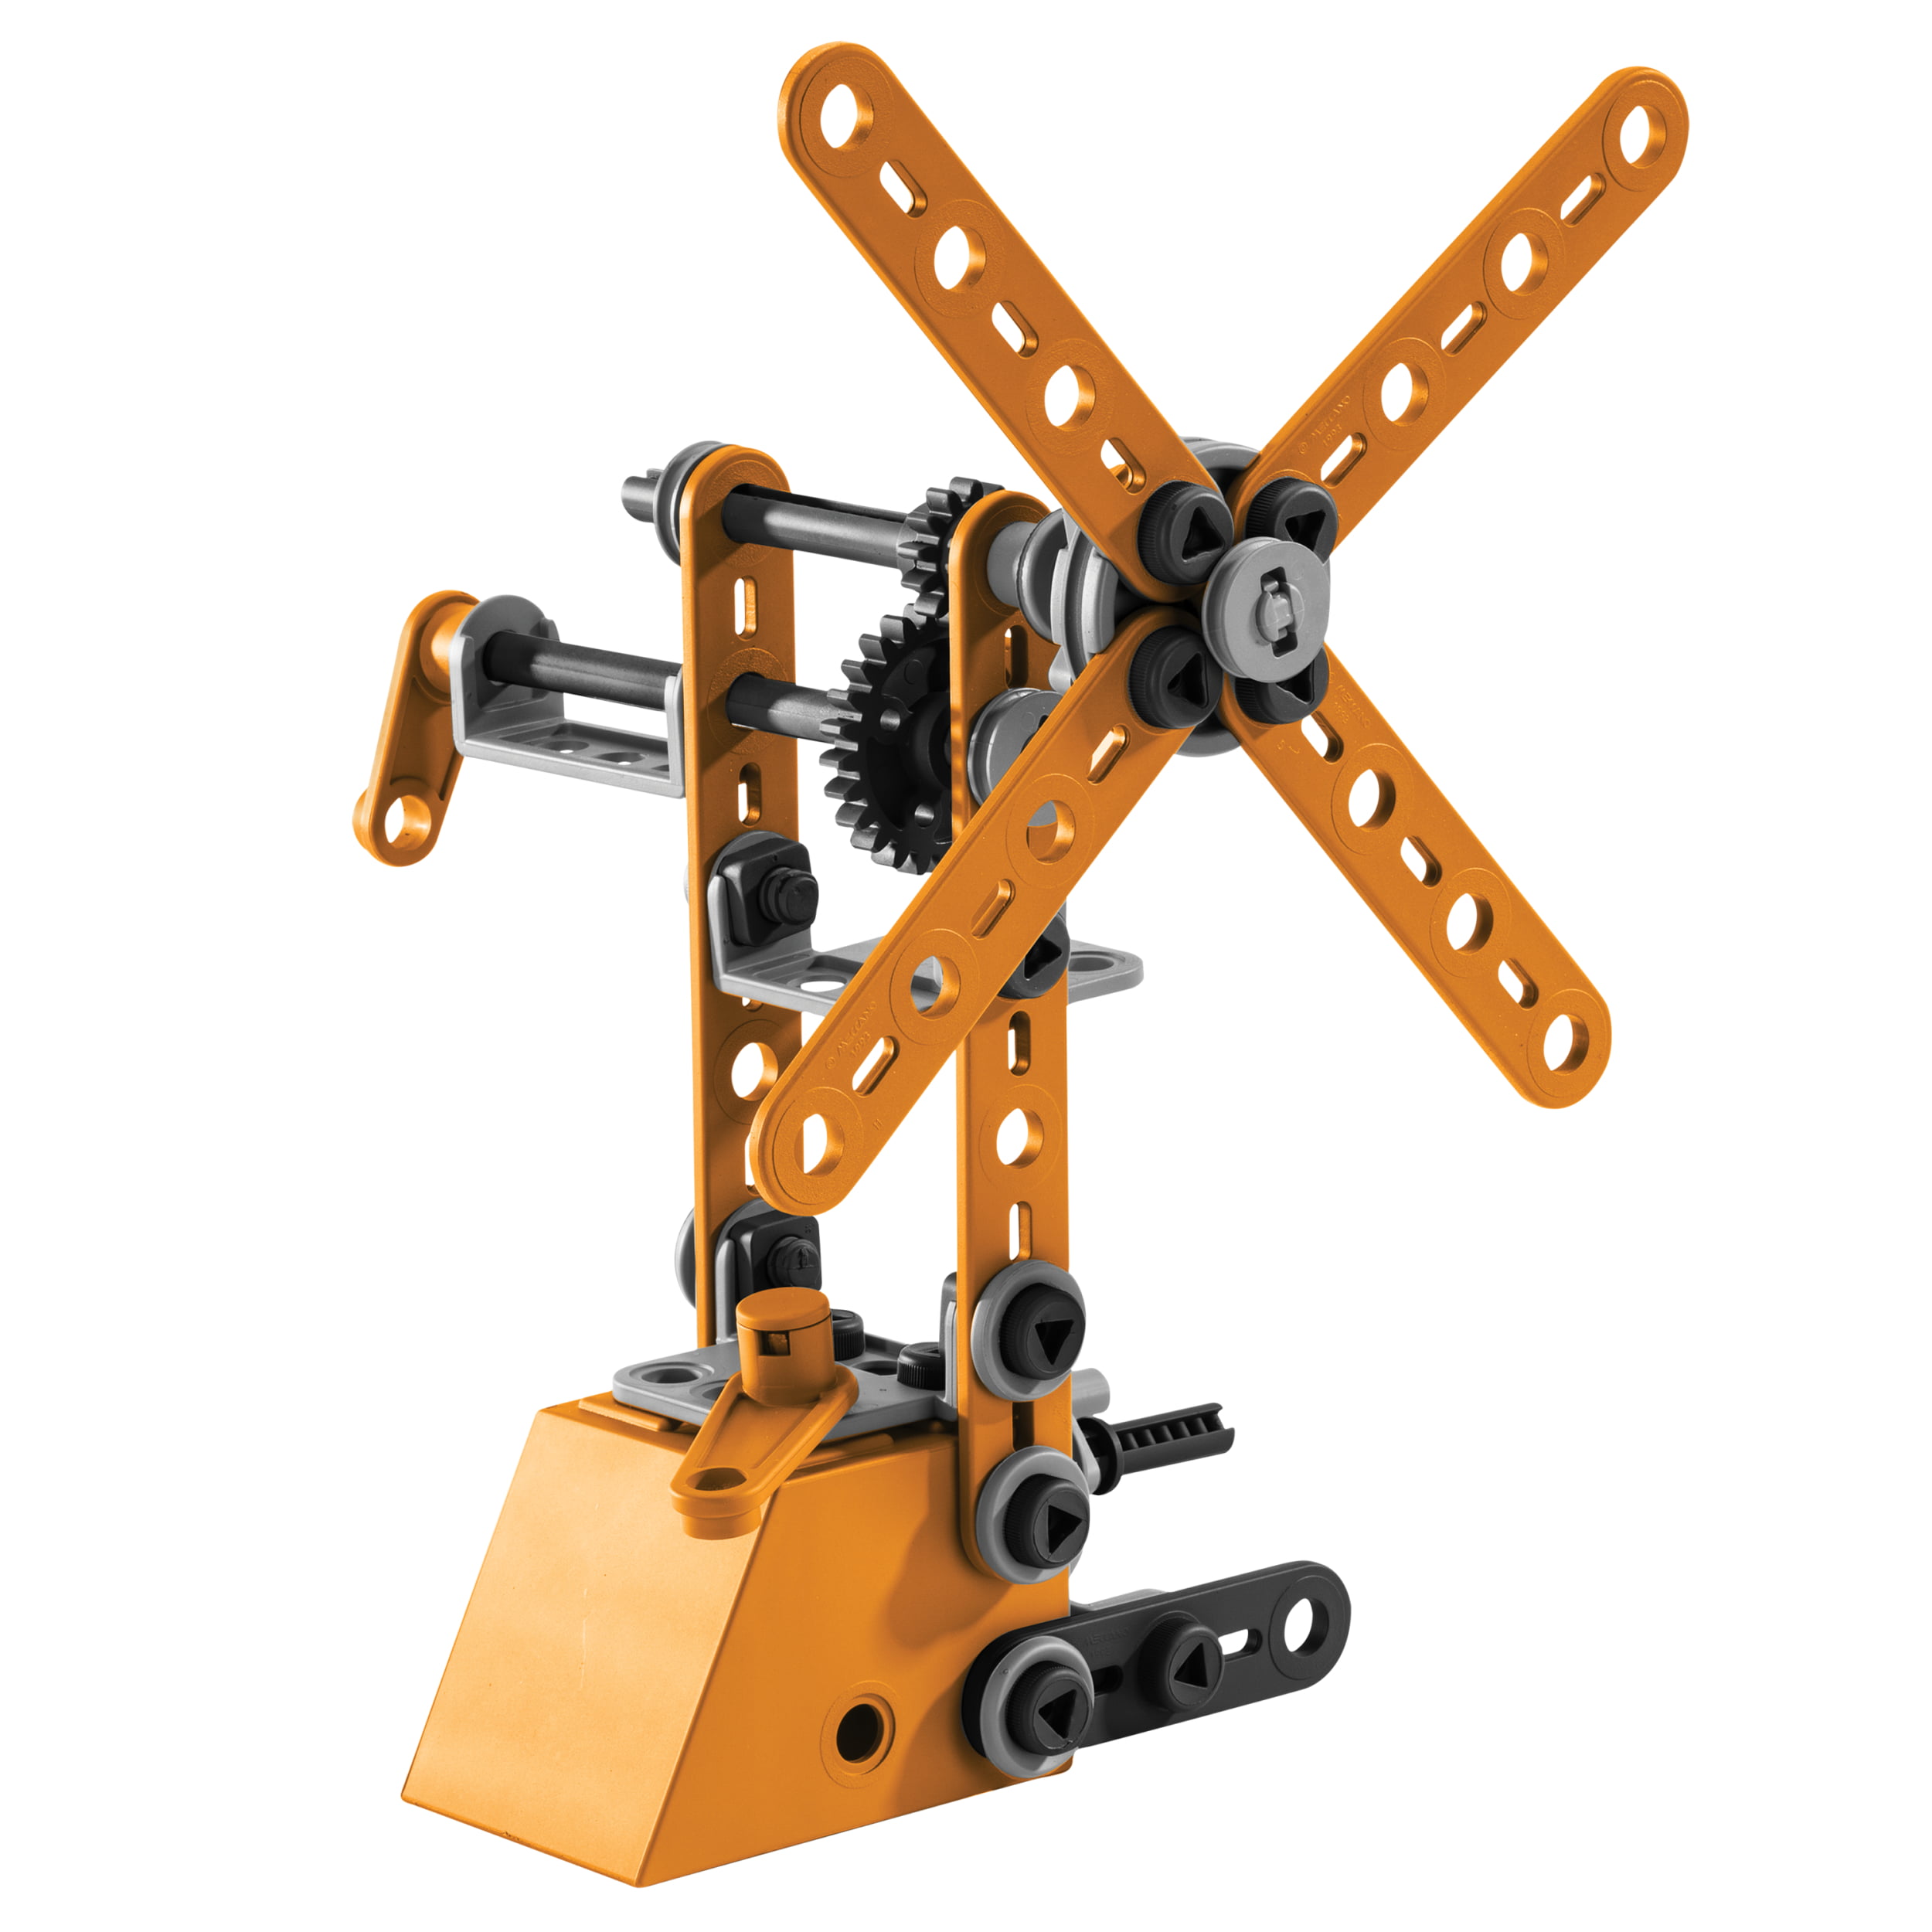 ⭐️ Meccano Junior Advanced Tool Maker System Parts - Over 200 pieces